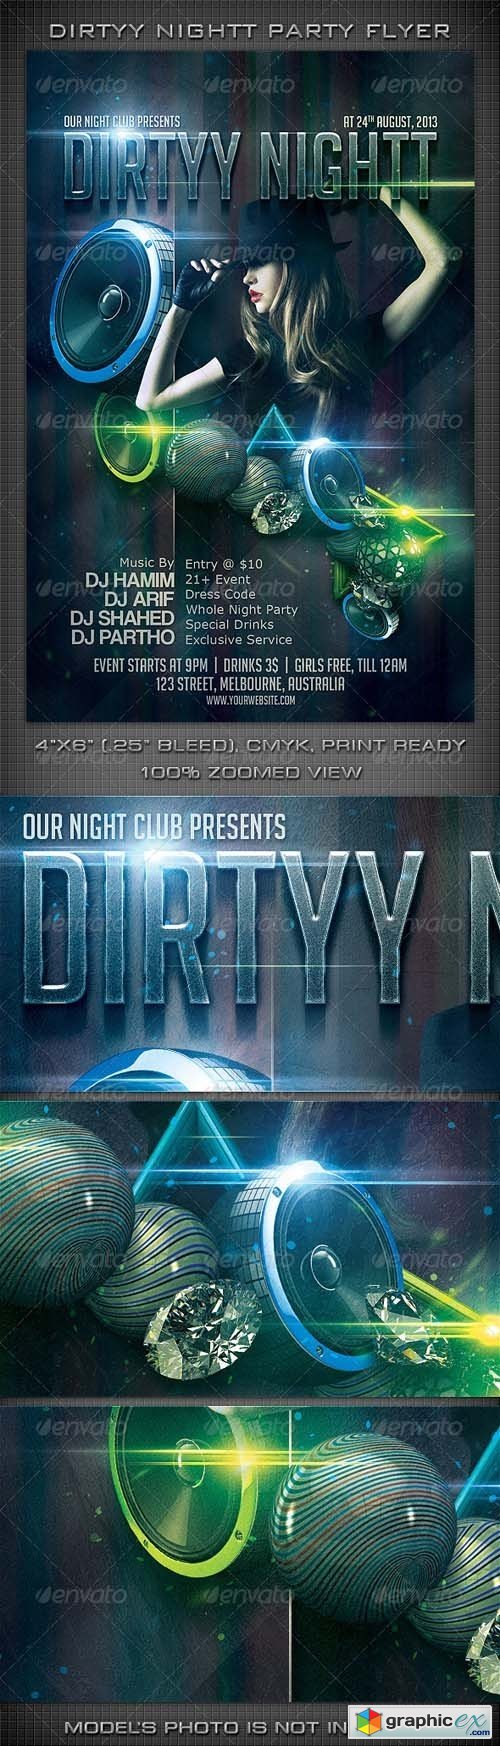 Dirtyy Nightt Party Flyer